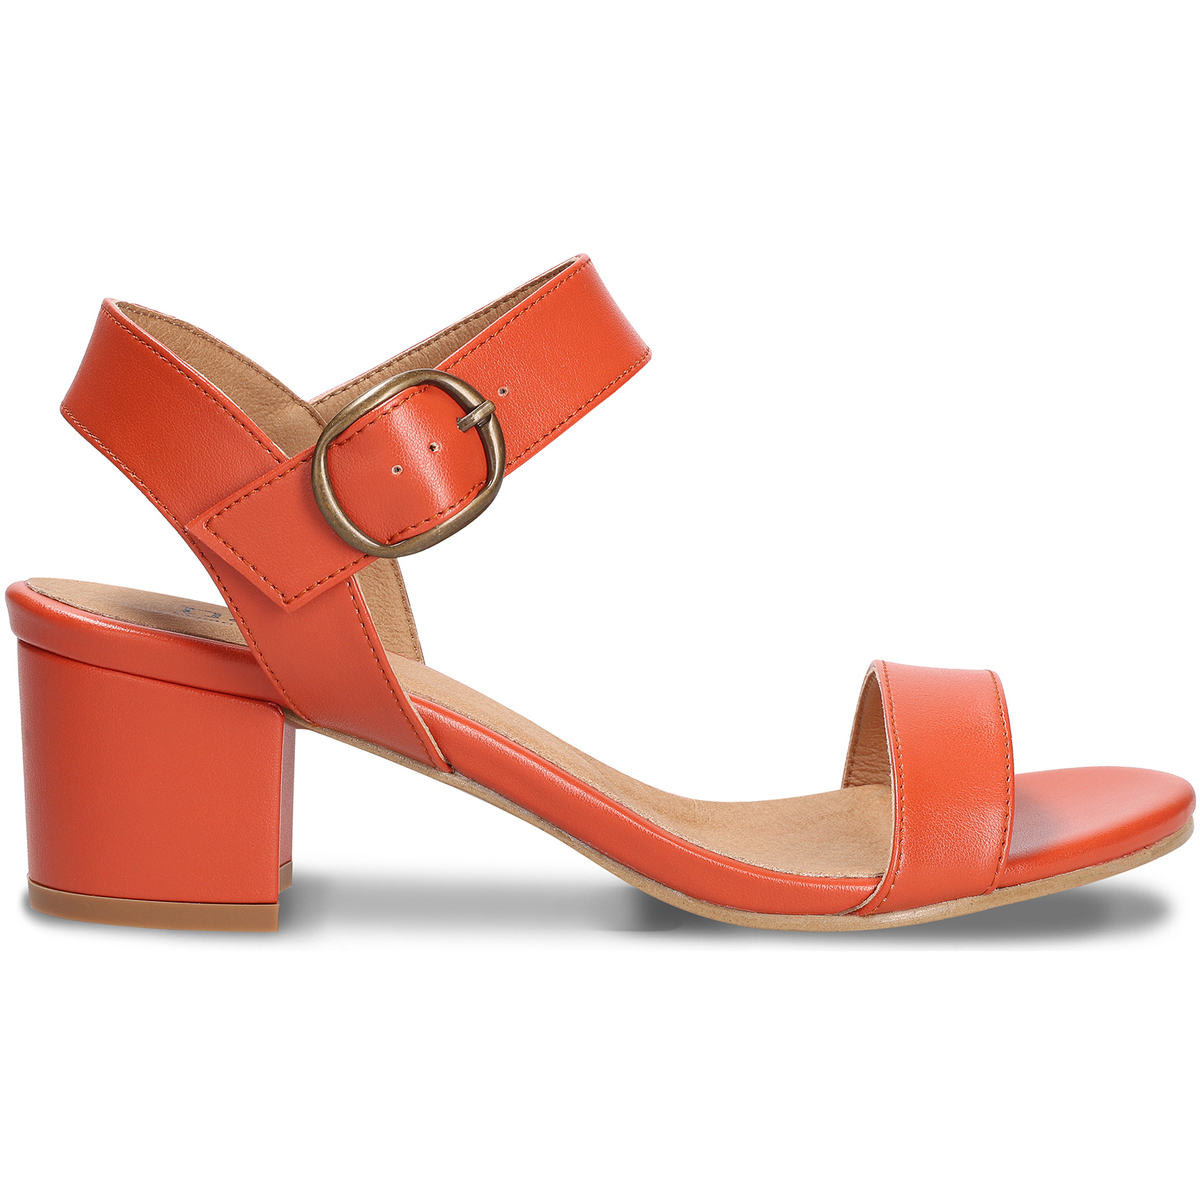 Sapatos Mulher Reshoevn8r offers shoe cleaning sets like the Zinnia_Orange Laranja